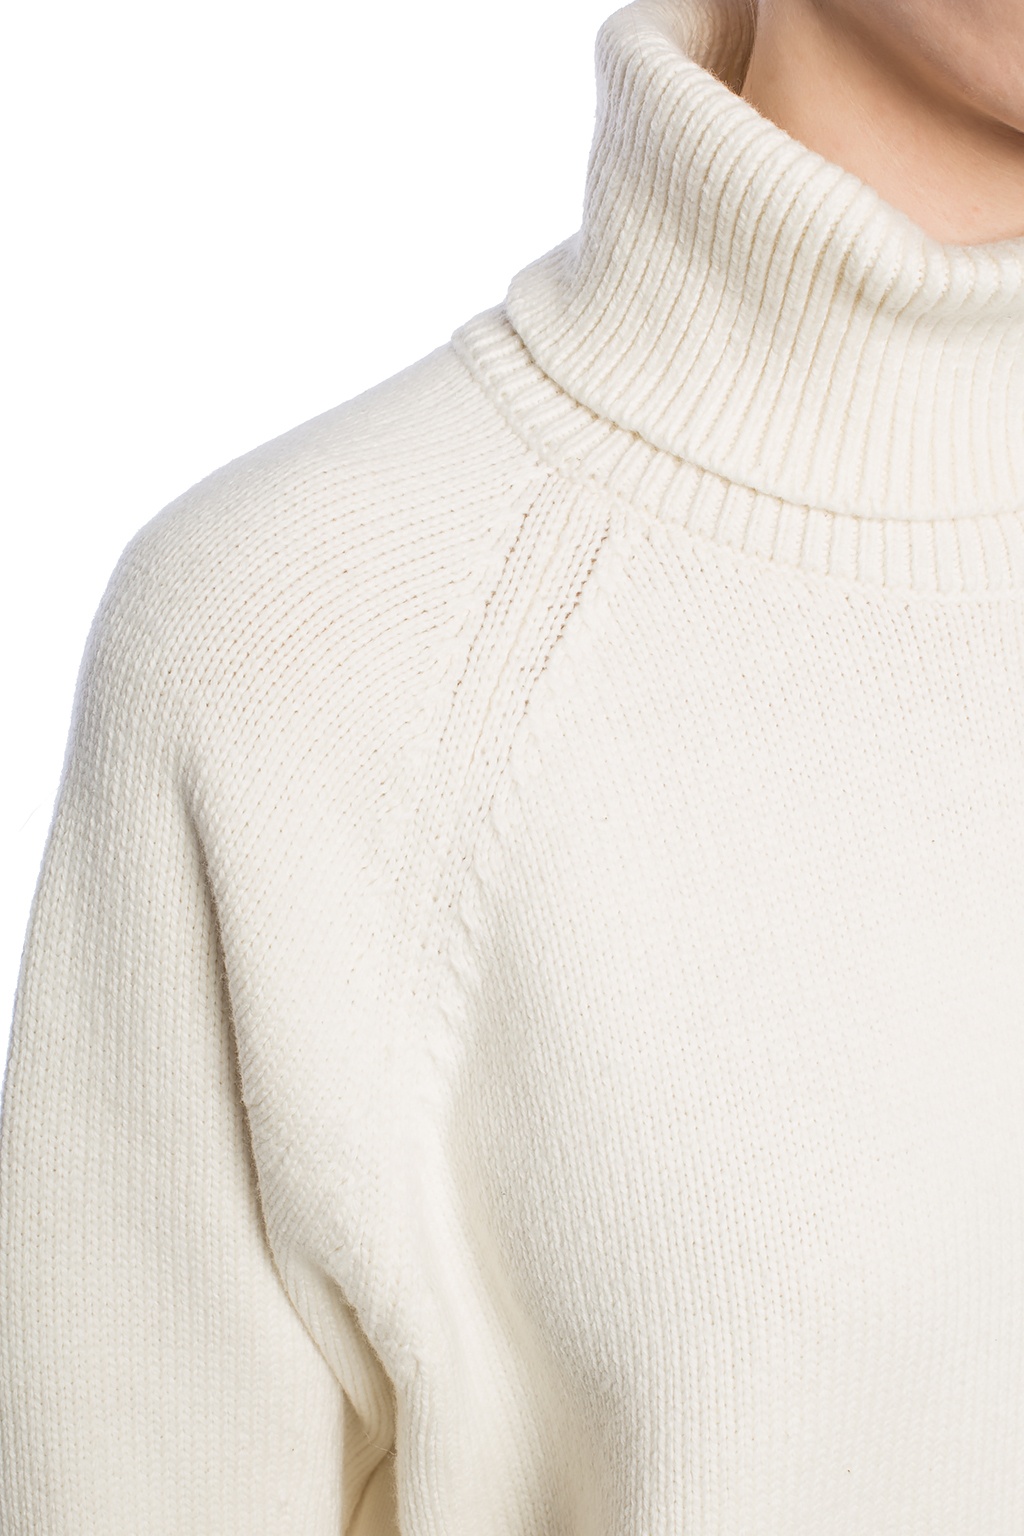 michael kors white sweater